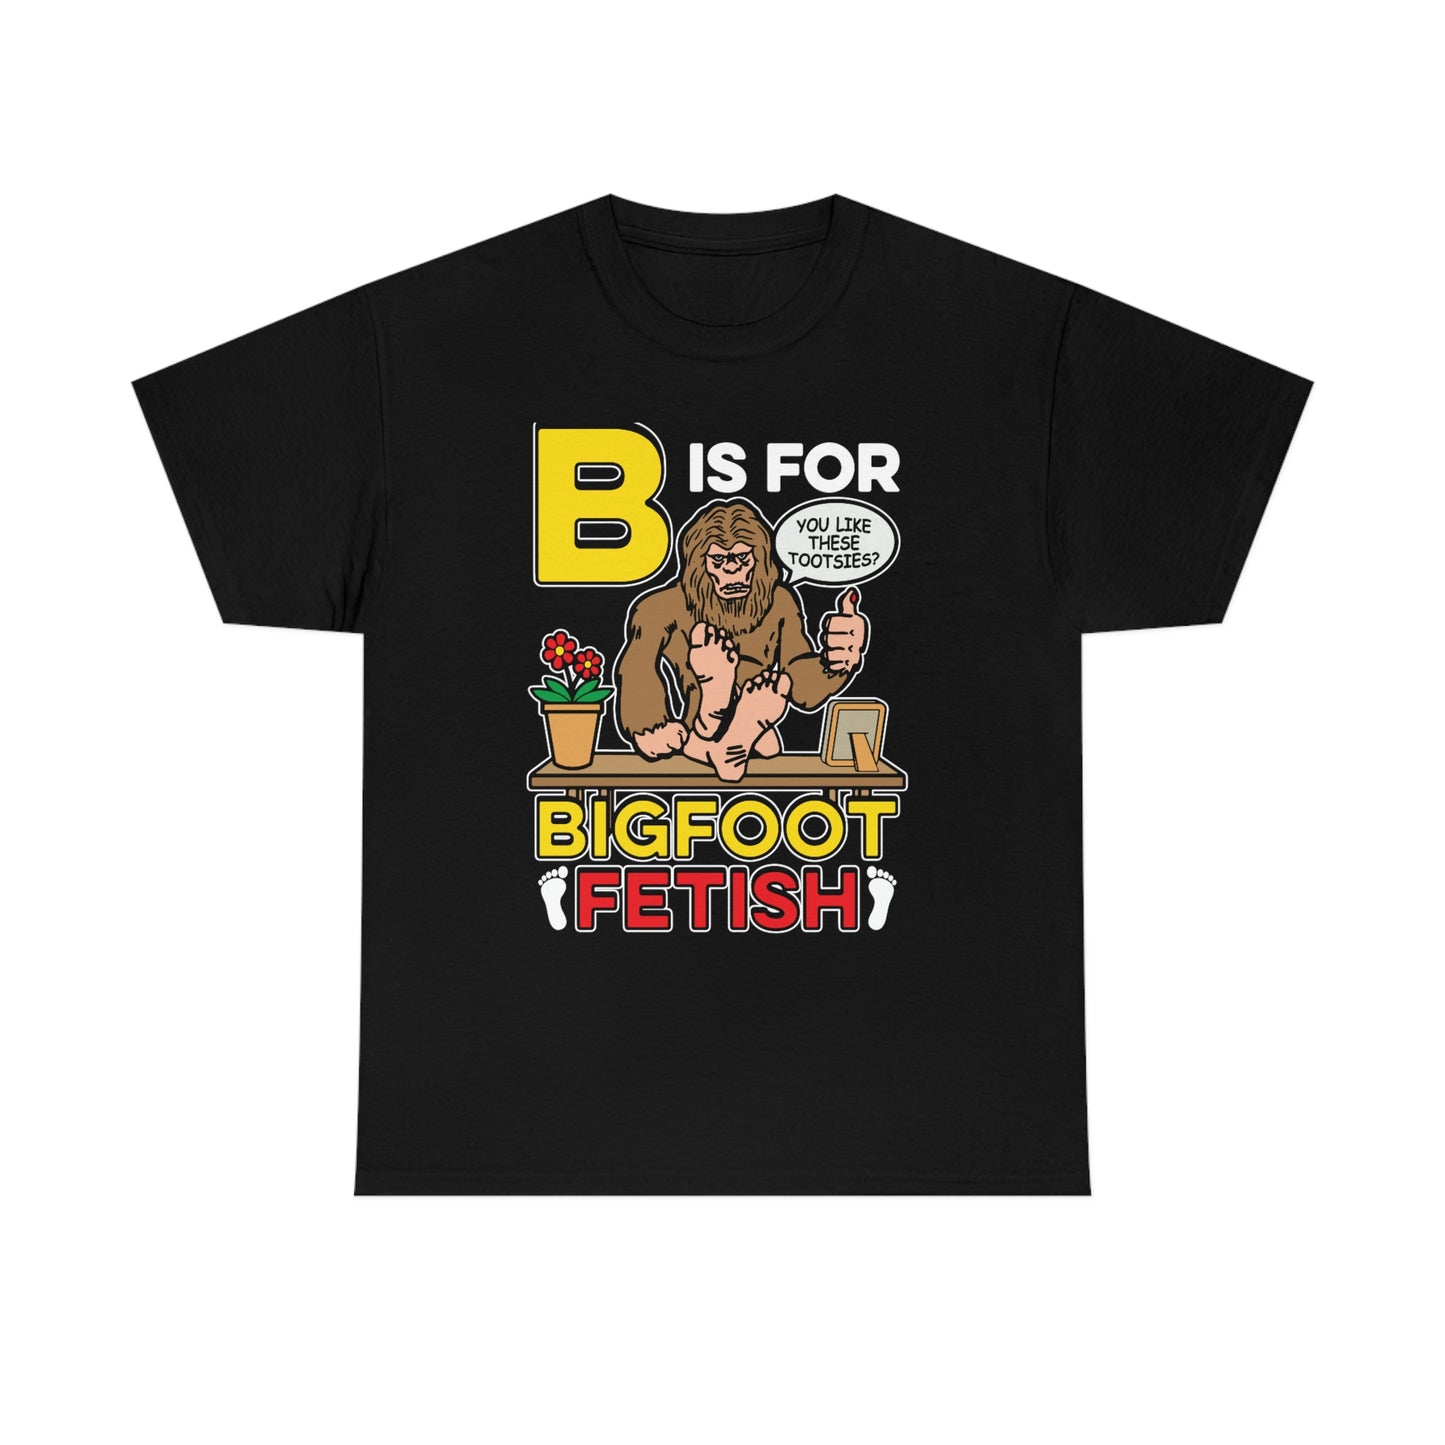 B Is For Bigfoot (Fetish).